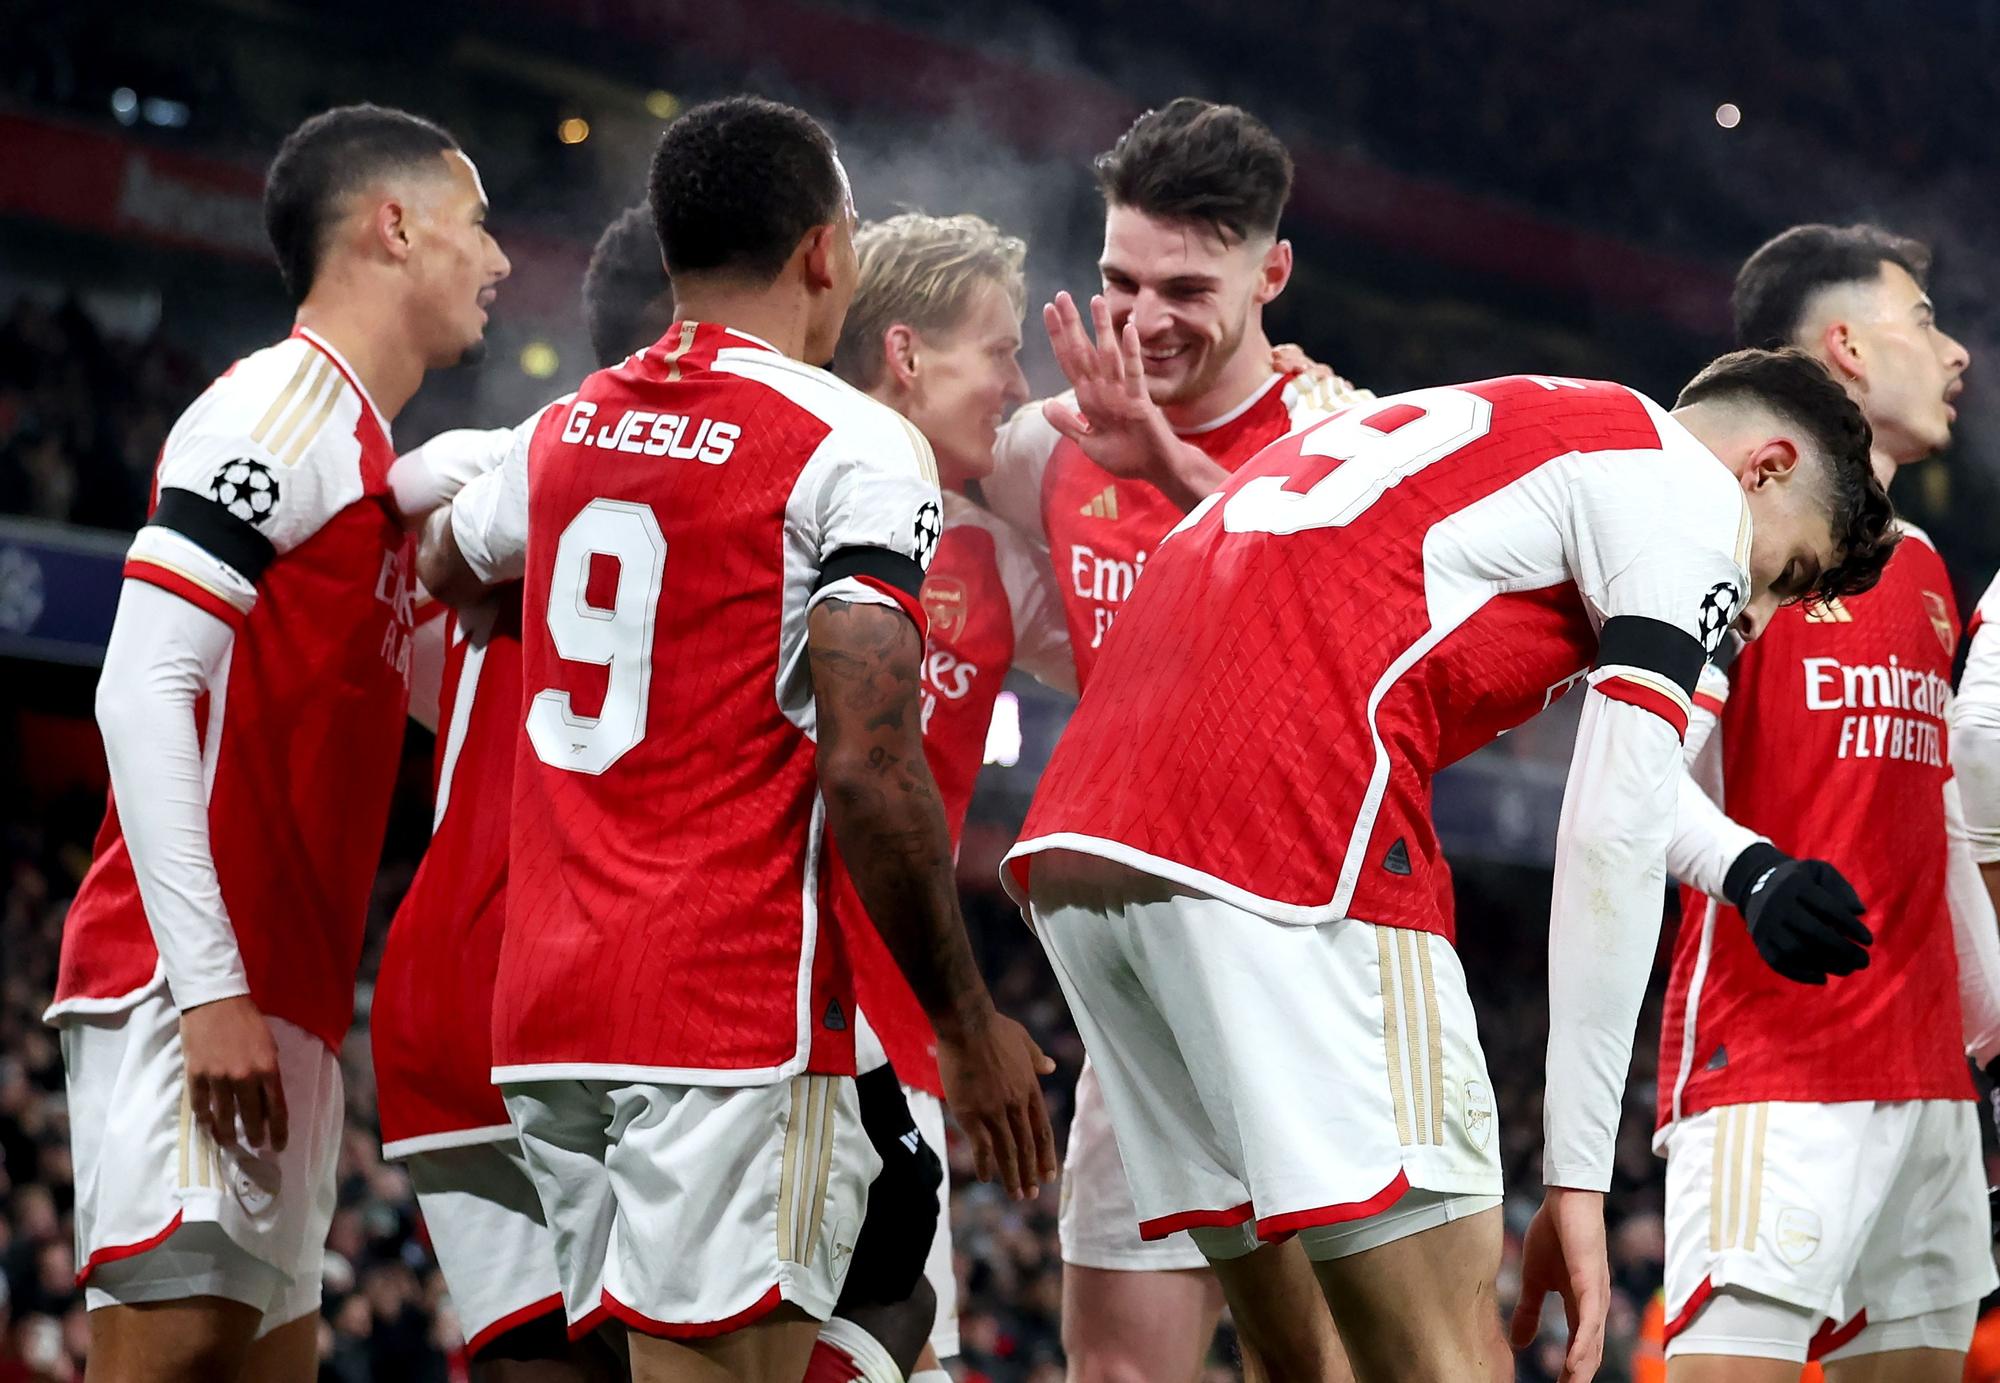 Resumen, goles y highlights del Arsenal 6 - 0 Lens de la Jornada 5 de la Fase de Grupos de la Champions League